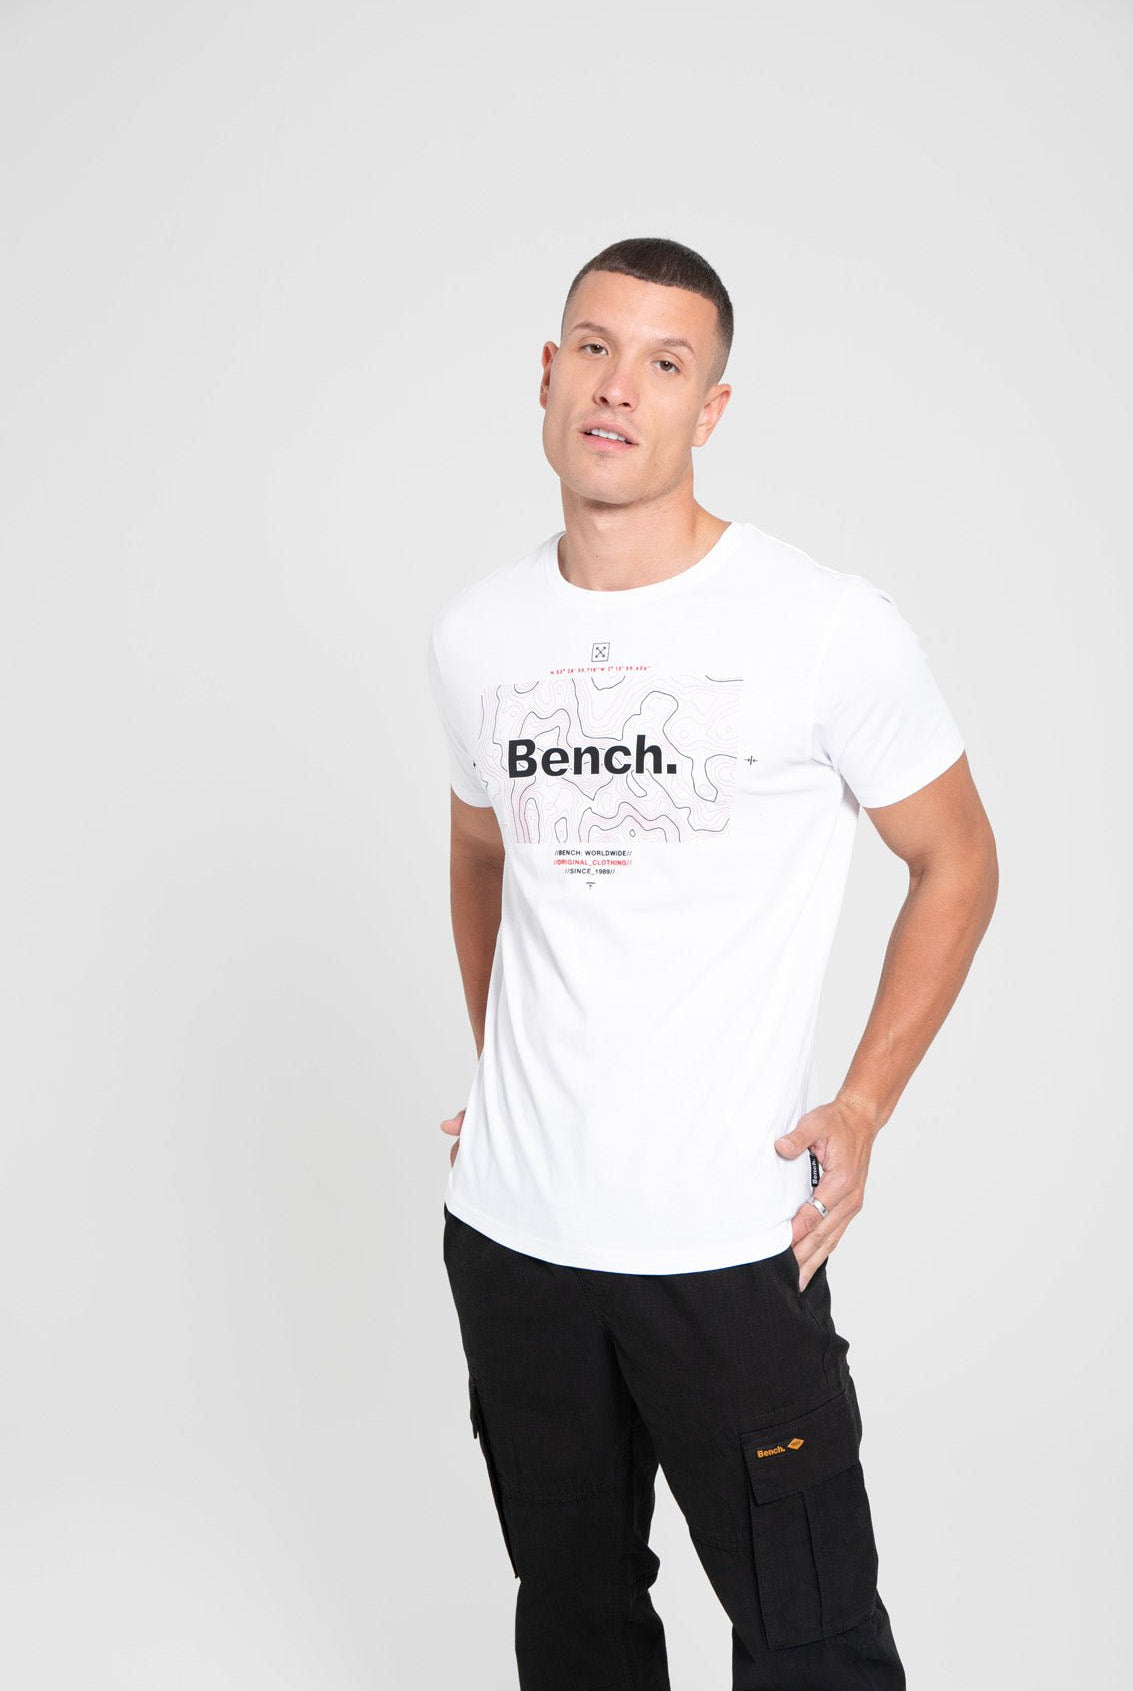 Mens 'HAWES' T-Shirt - WHITE - Shop at www.Bench.co.uk #LoveMyHood